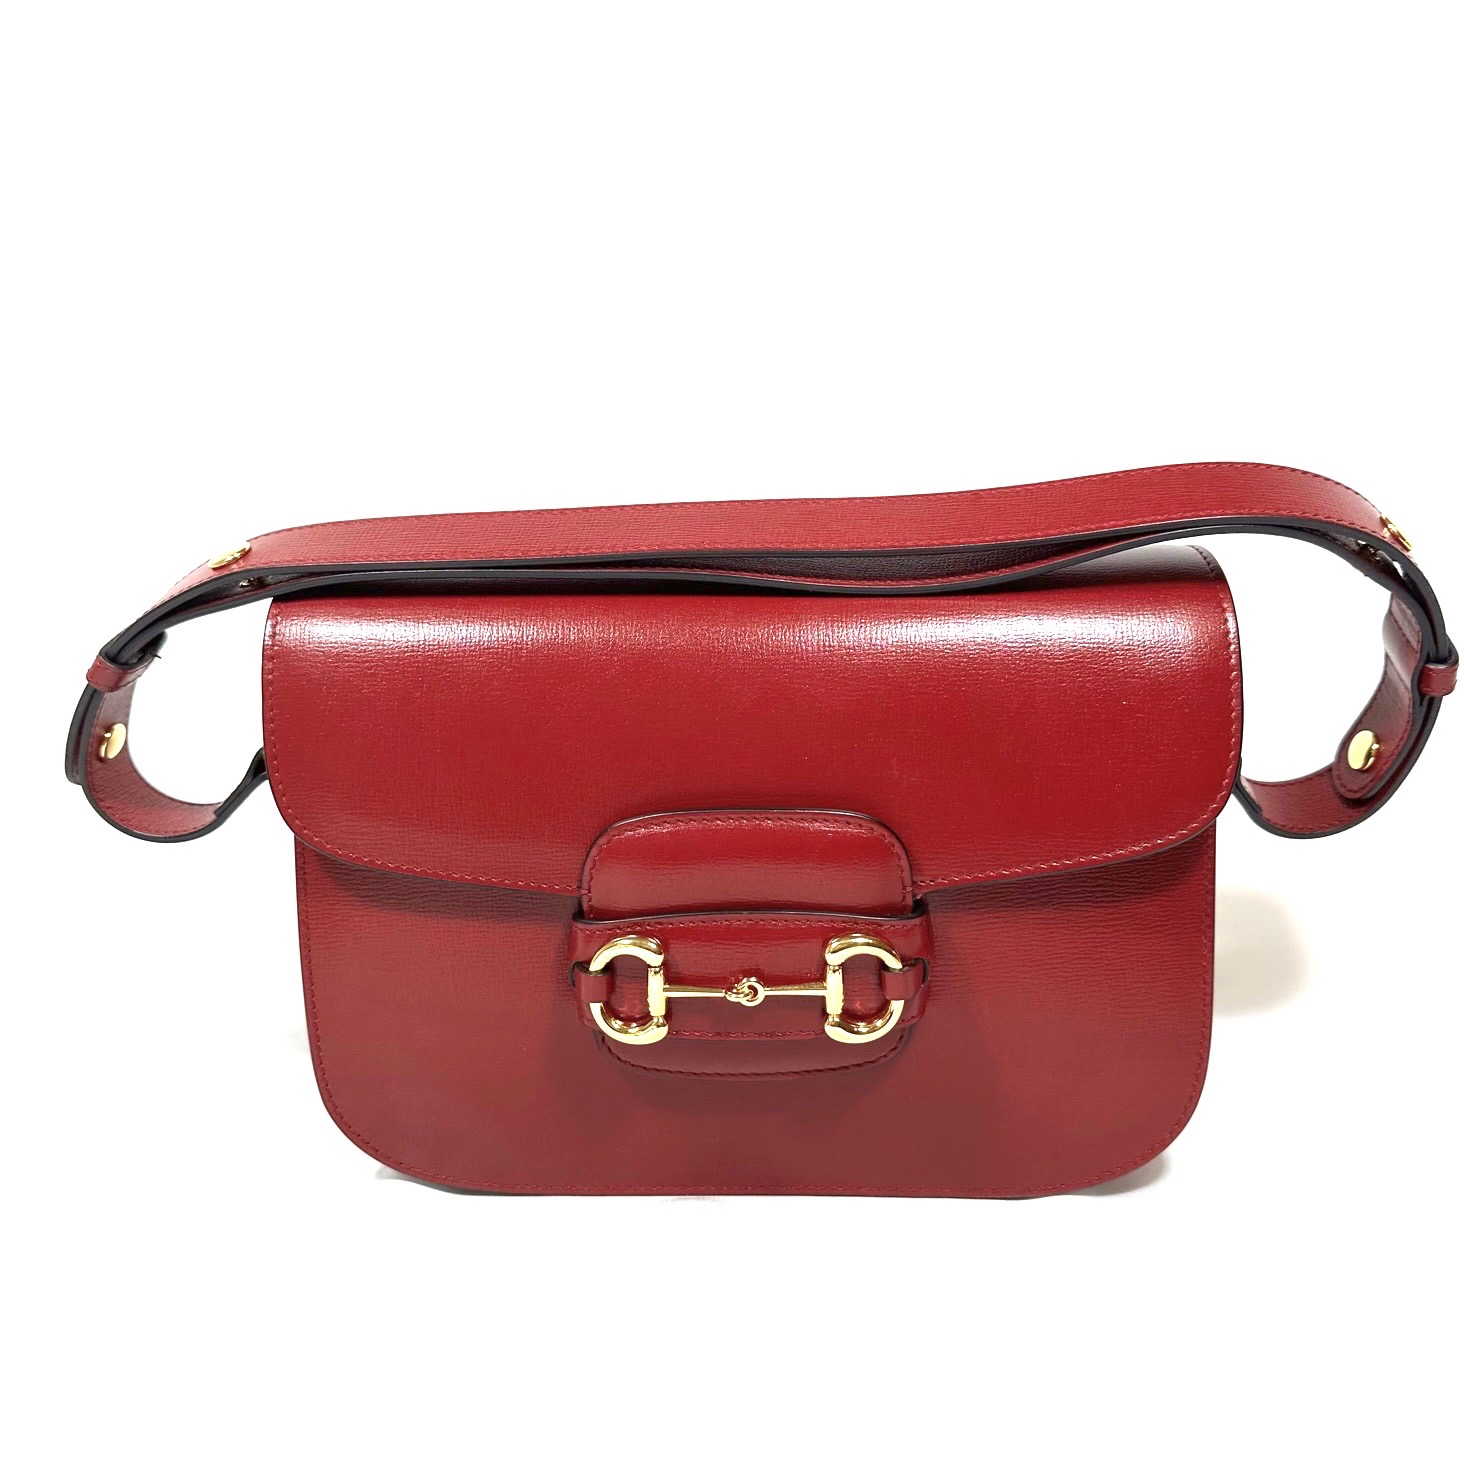 Gucci Horsebit 1955 Leather Messenger Bag Red